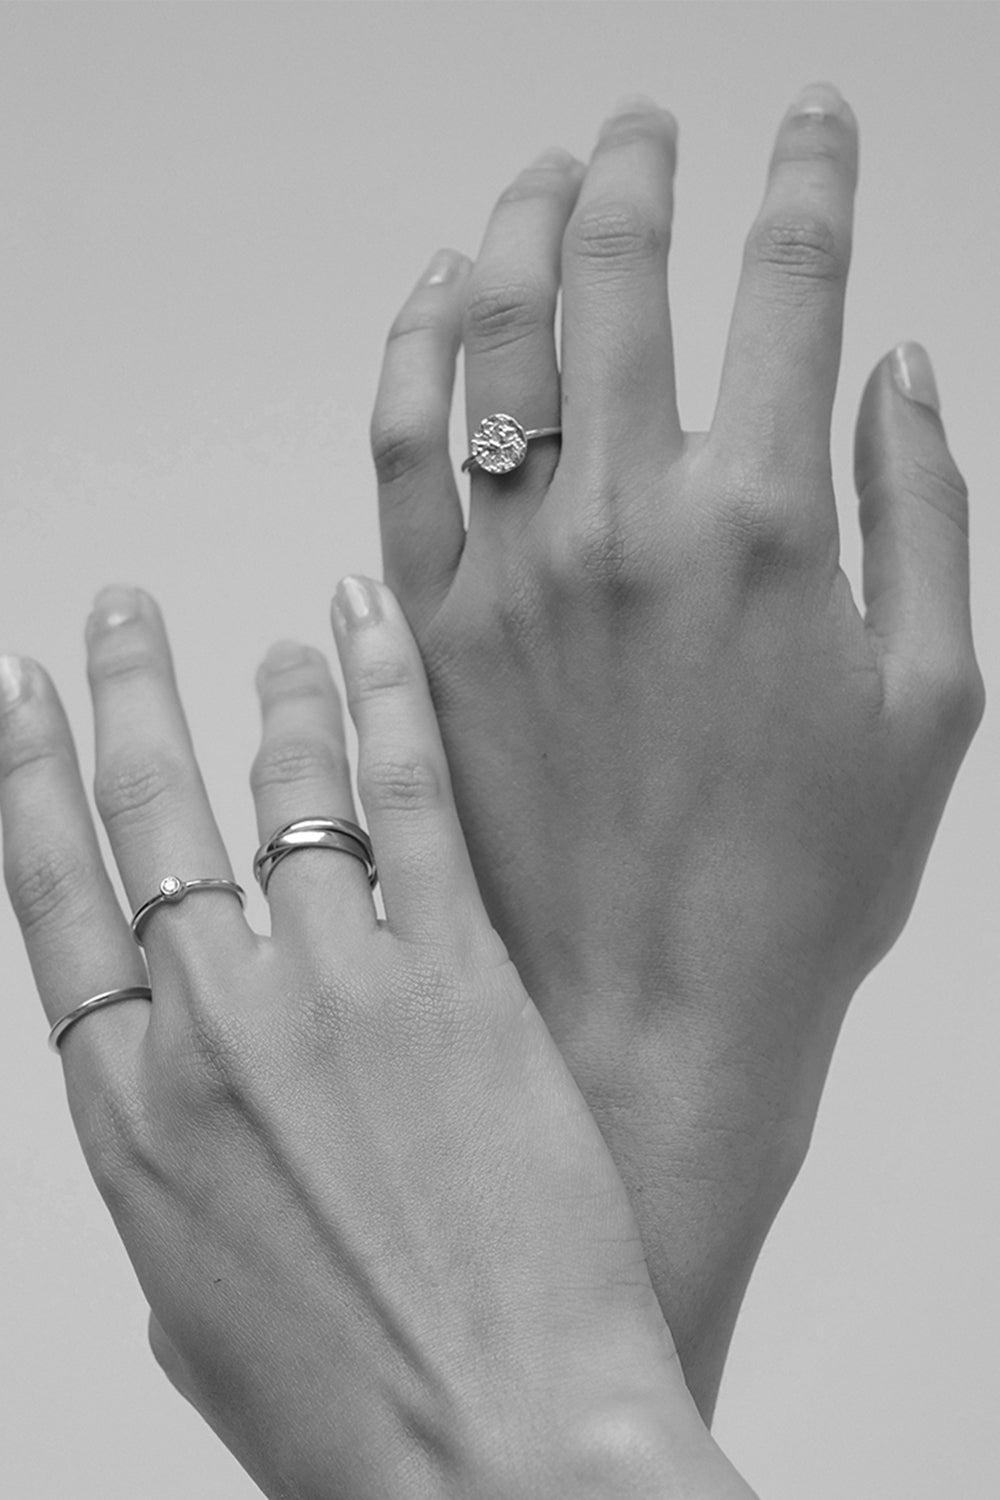 Mini Coin Ring | Silver or 9K White Gold| Natasha Schweitzer